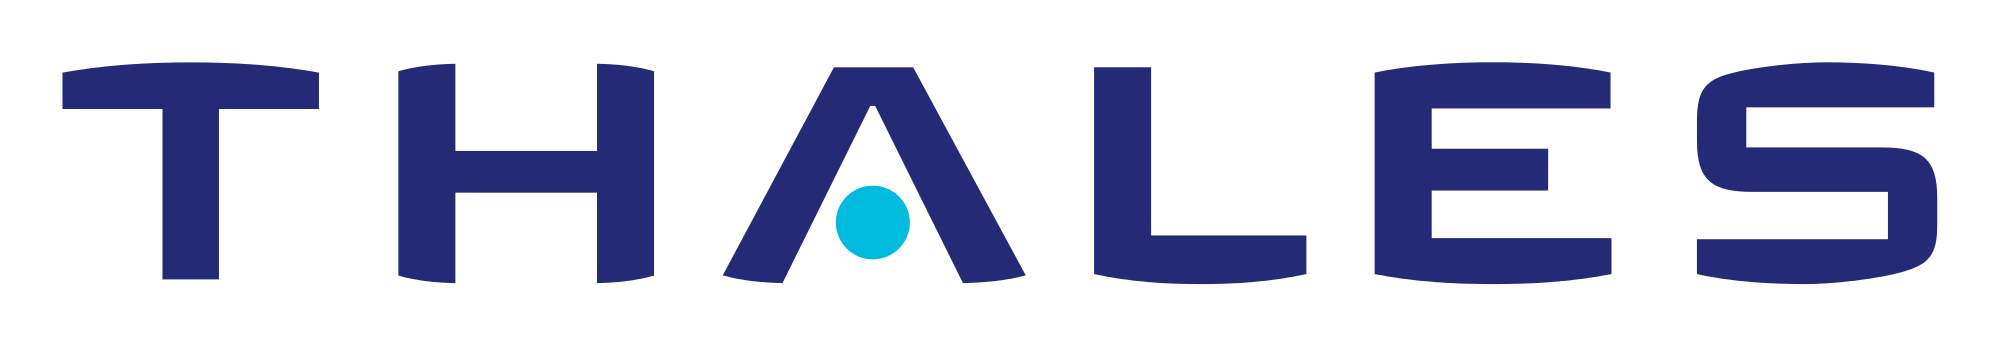 Thales_Logo_svg